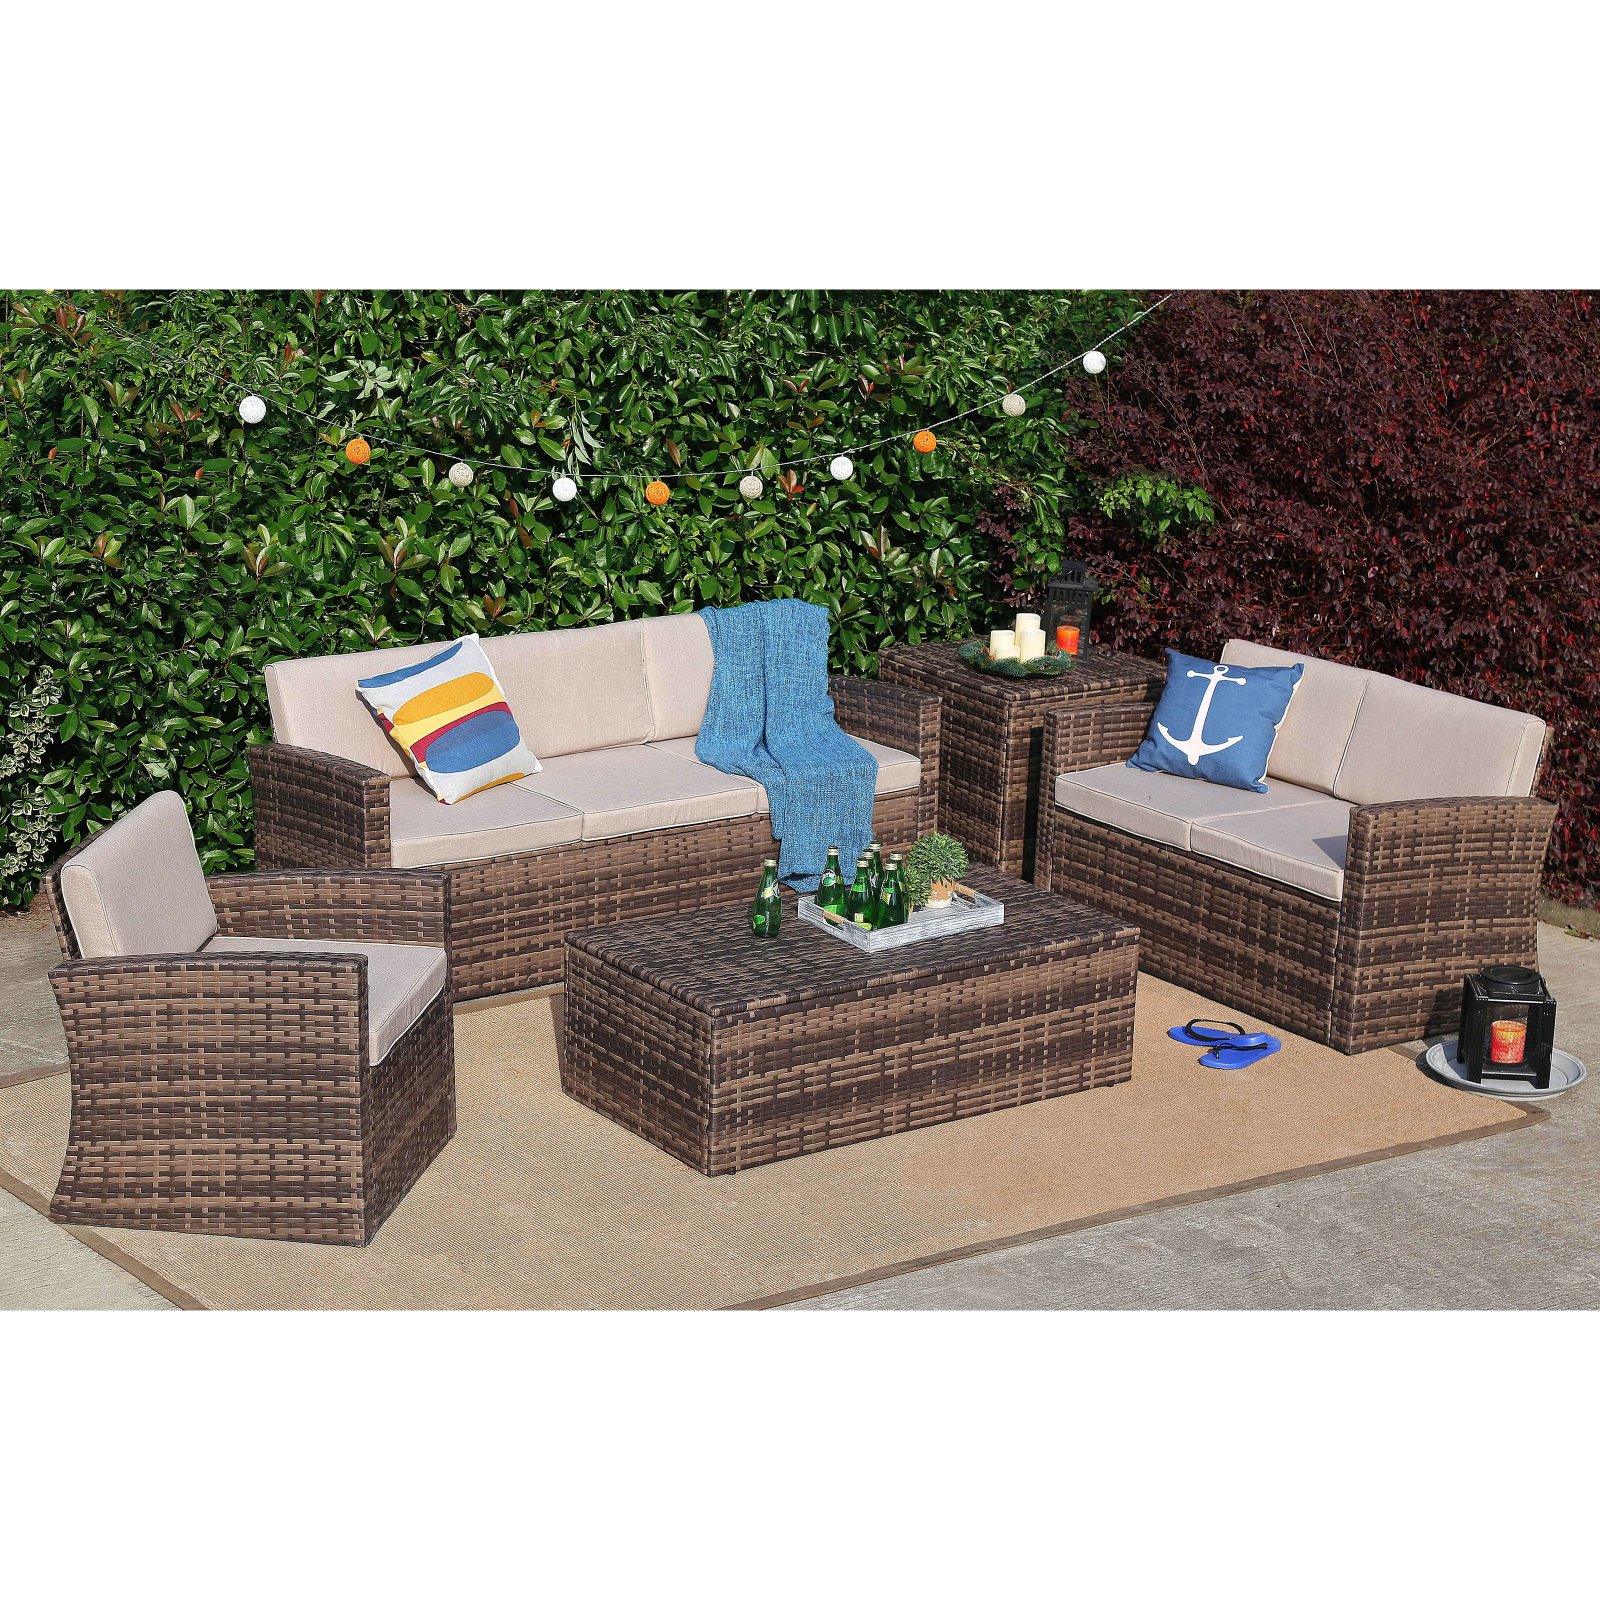 Baner Garden Rattan 5 Piece Outdoor Conversation Set with Cushions - image 1 of 14